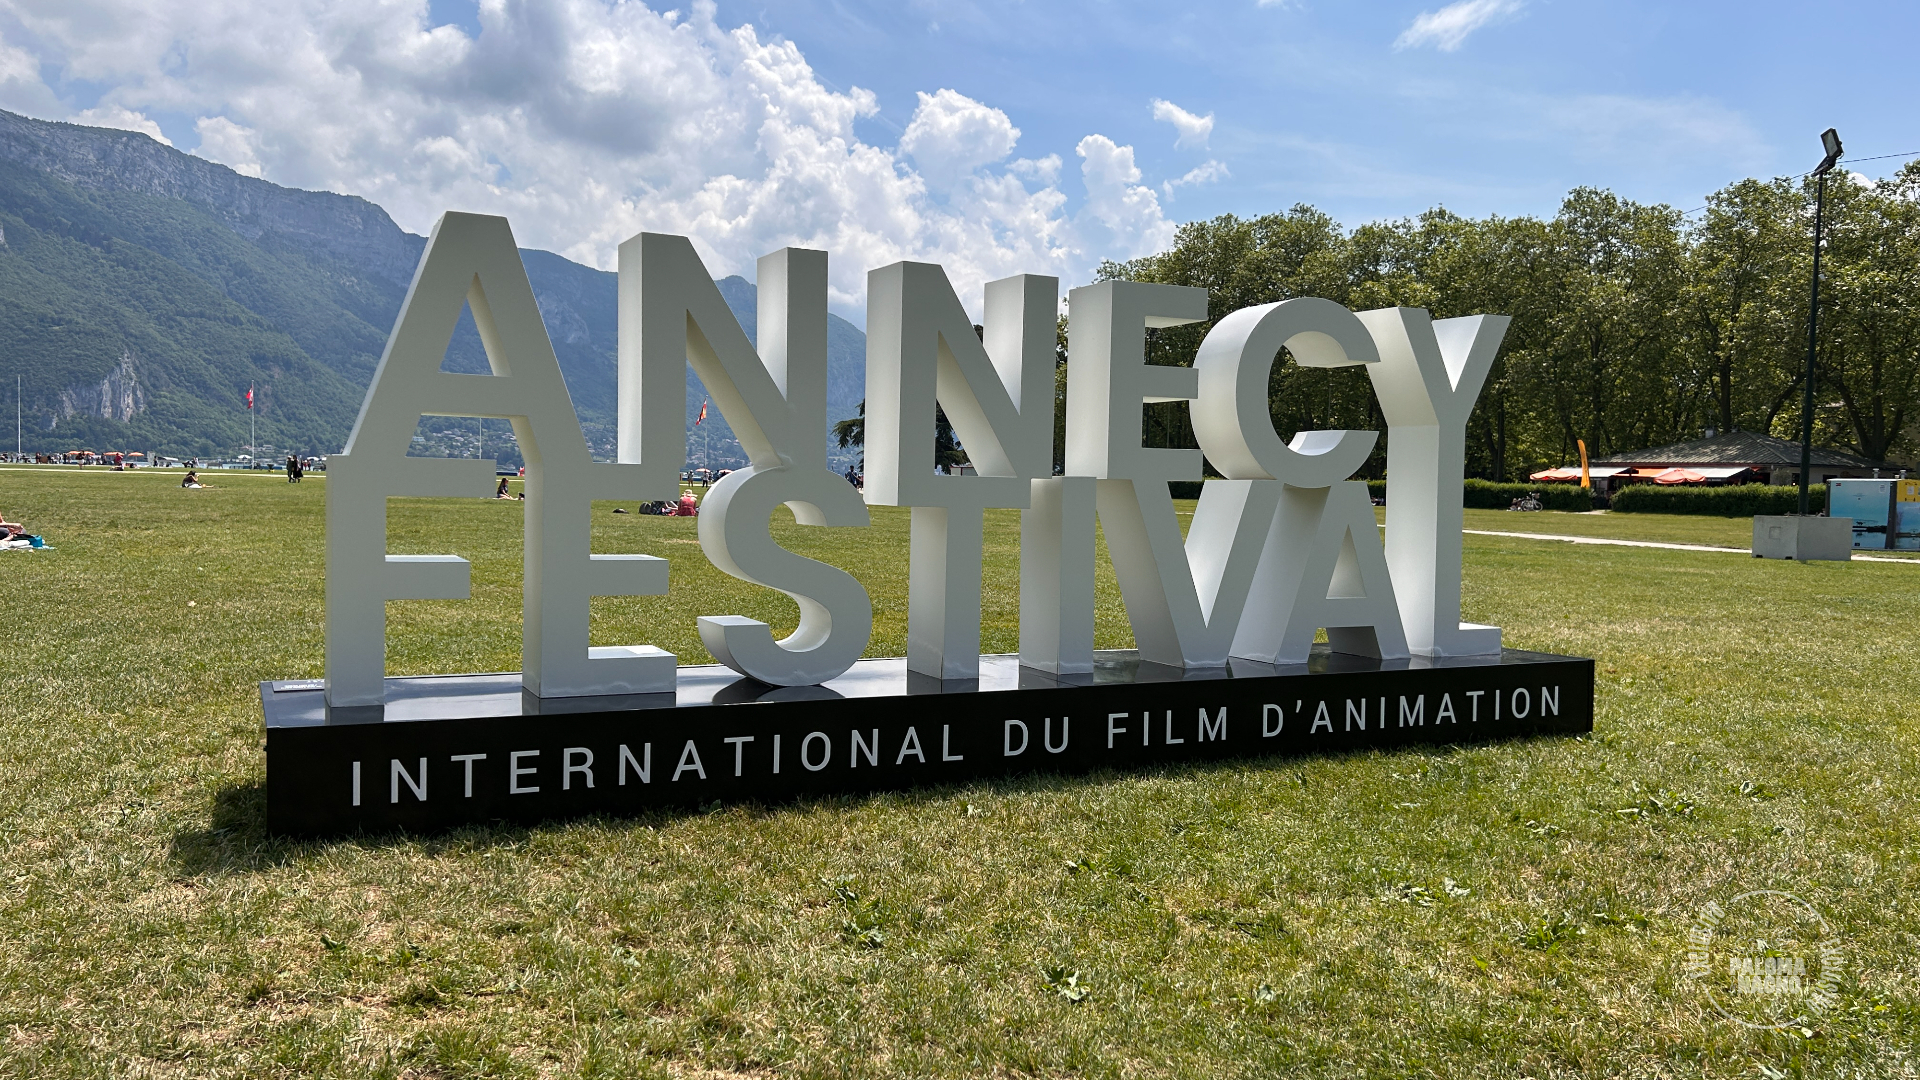 Festival de Annecy datos curiosos 